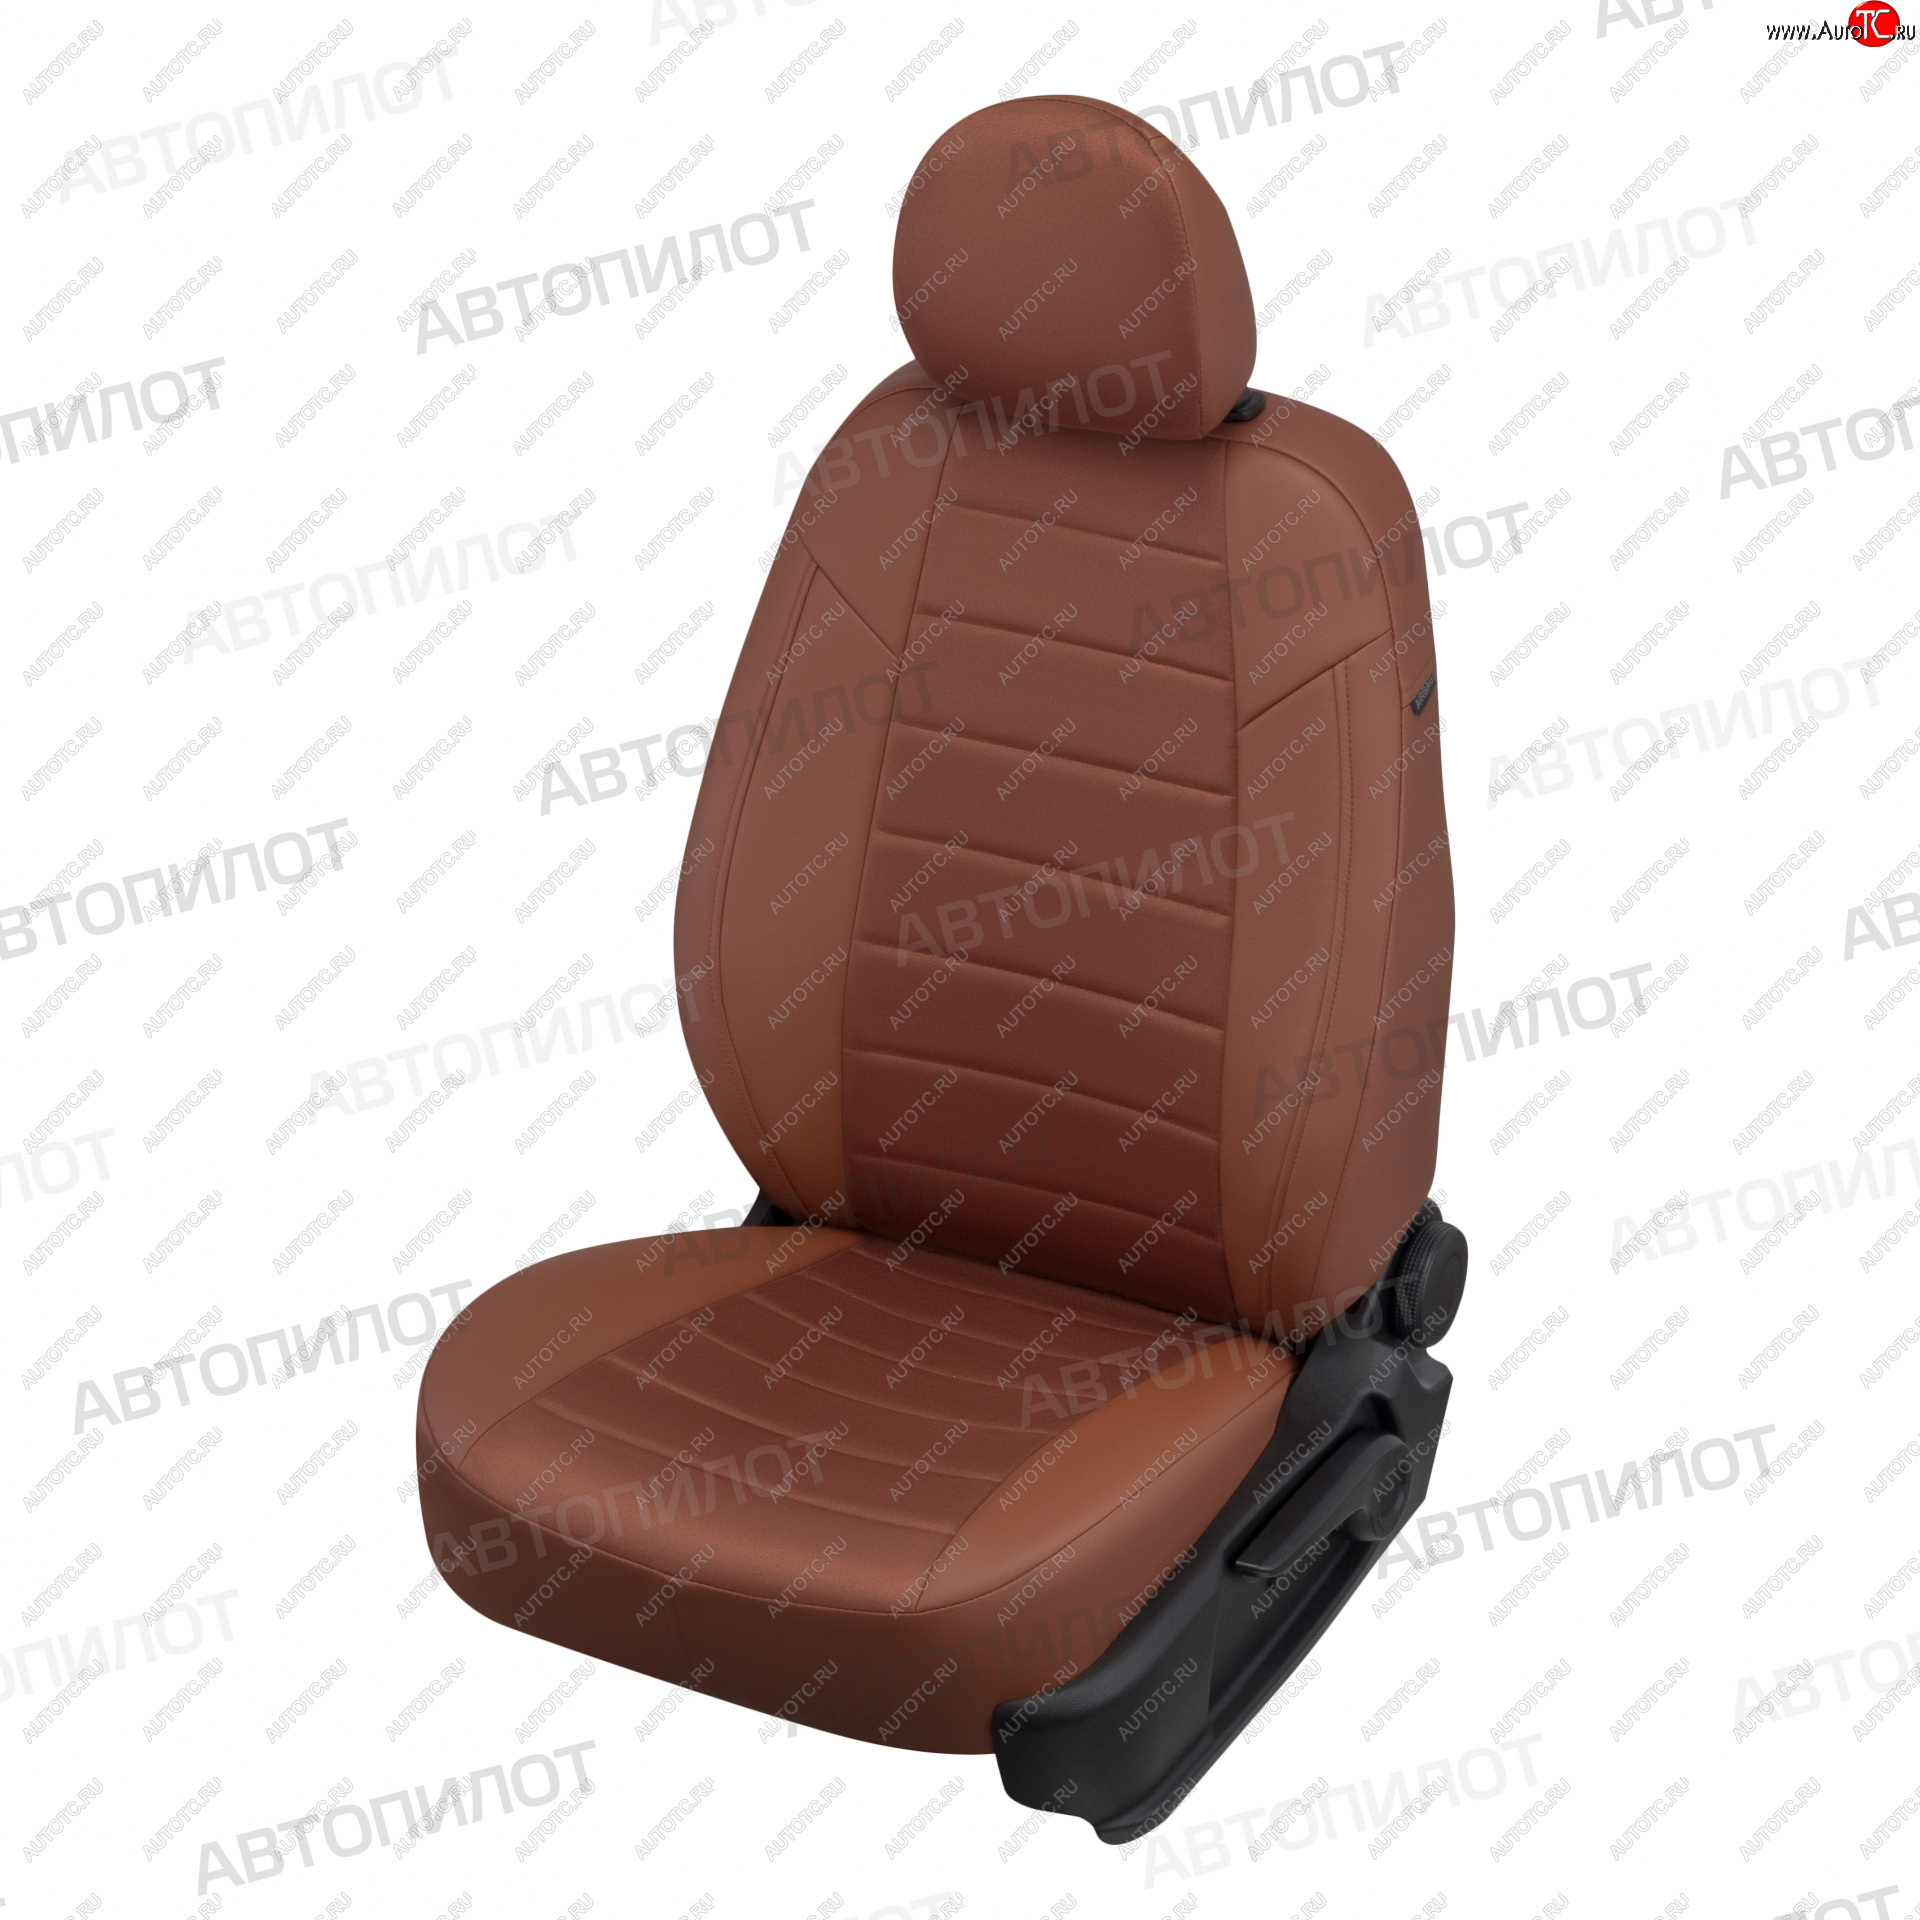 7 499 р. Чехлы сидений (экокожа/алькантара) Автопилот  KIA Sportage  3 SL (2010-2016) (коричневый)